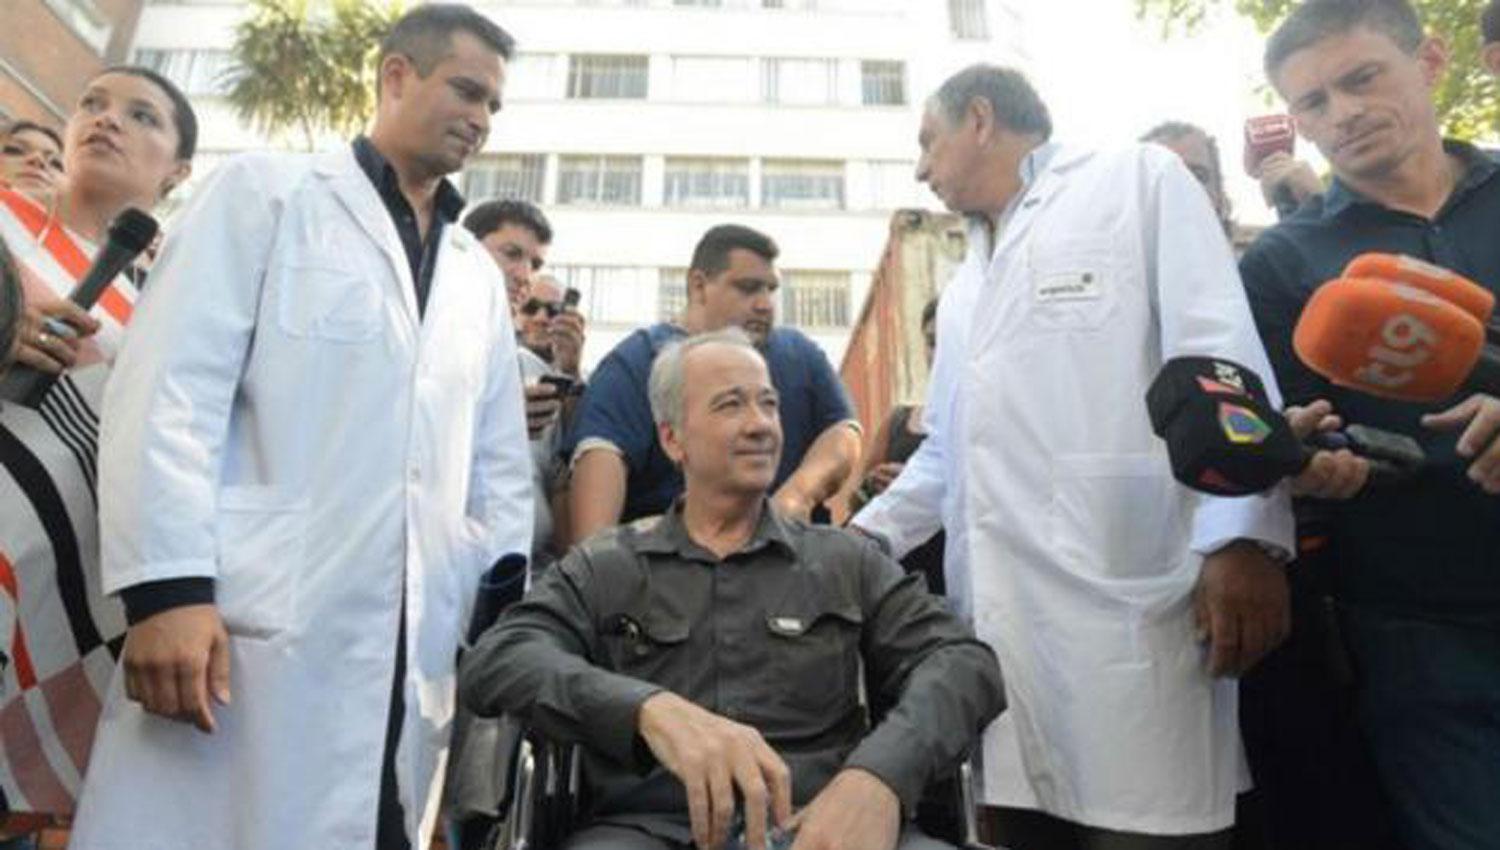 Joe Wolek sale del Hospital Argerich tras recibir su alta médica. FOTO TOMADA DE CLARÍN.COM